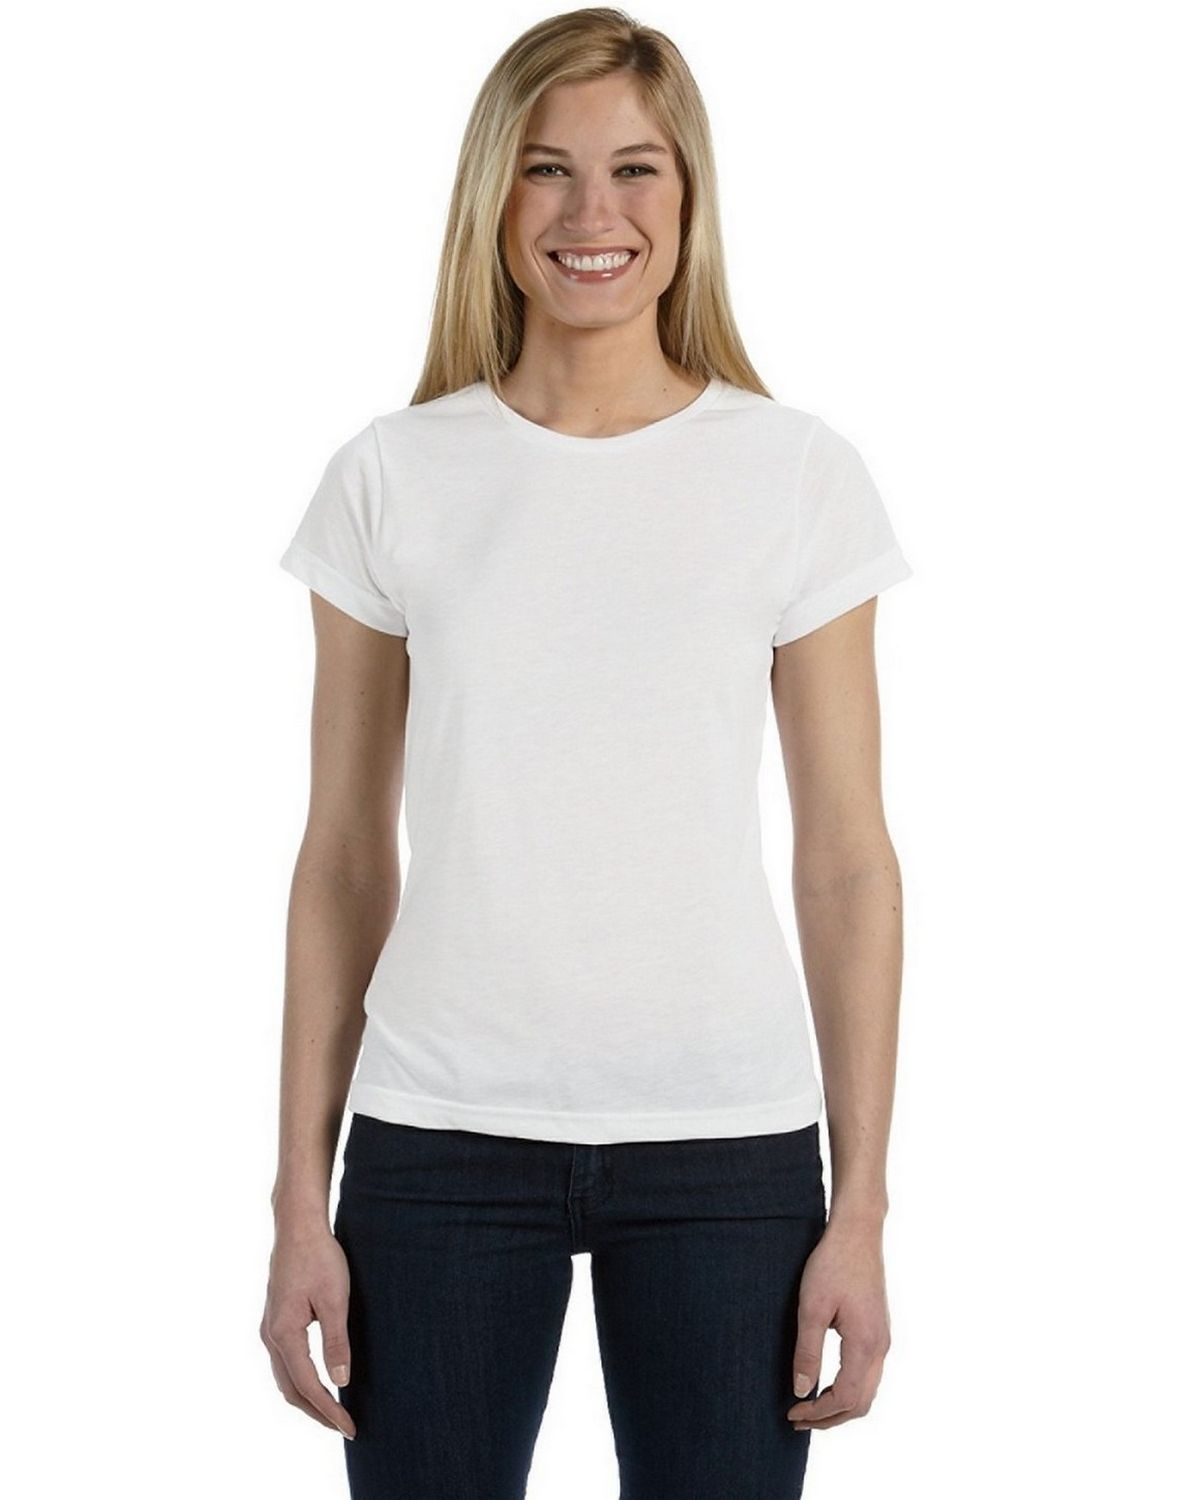 Sublivie 1510 Ladies Polyester T-Shirt - ApparelnBags.com